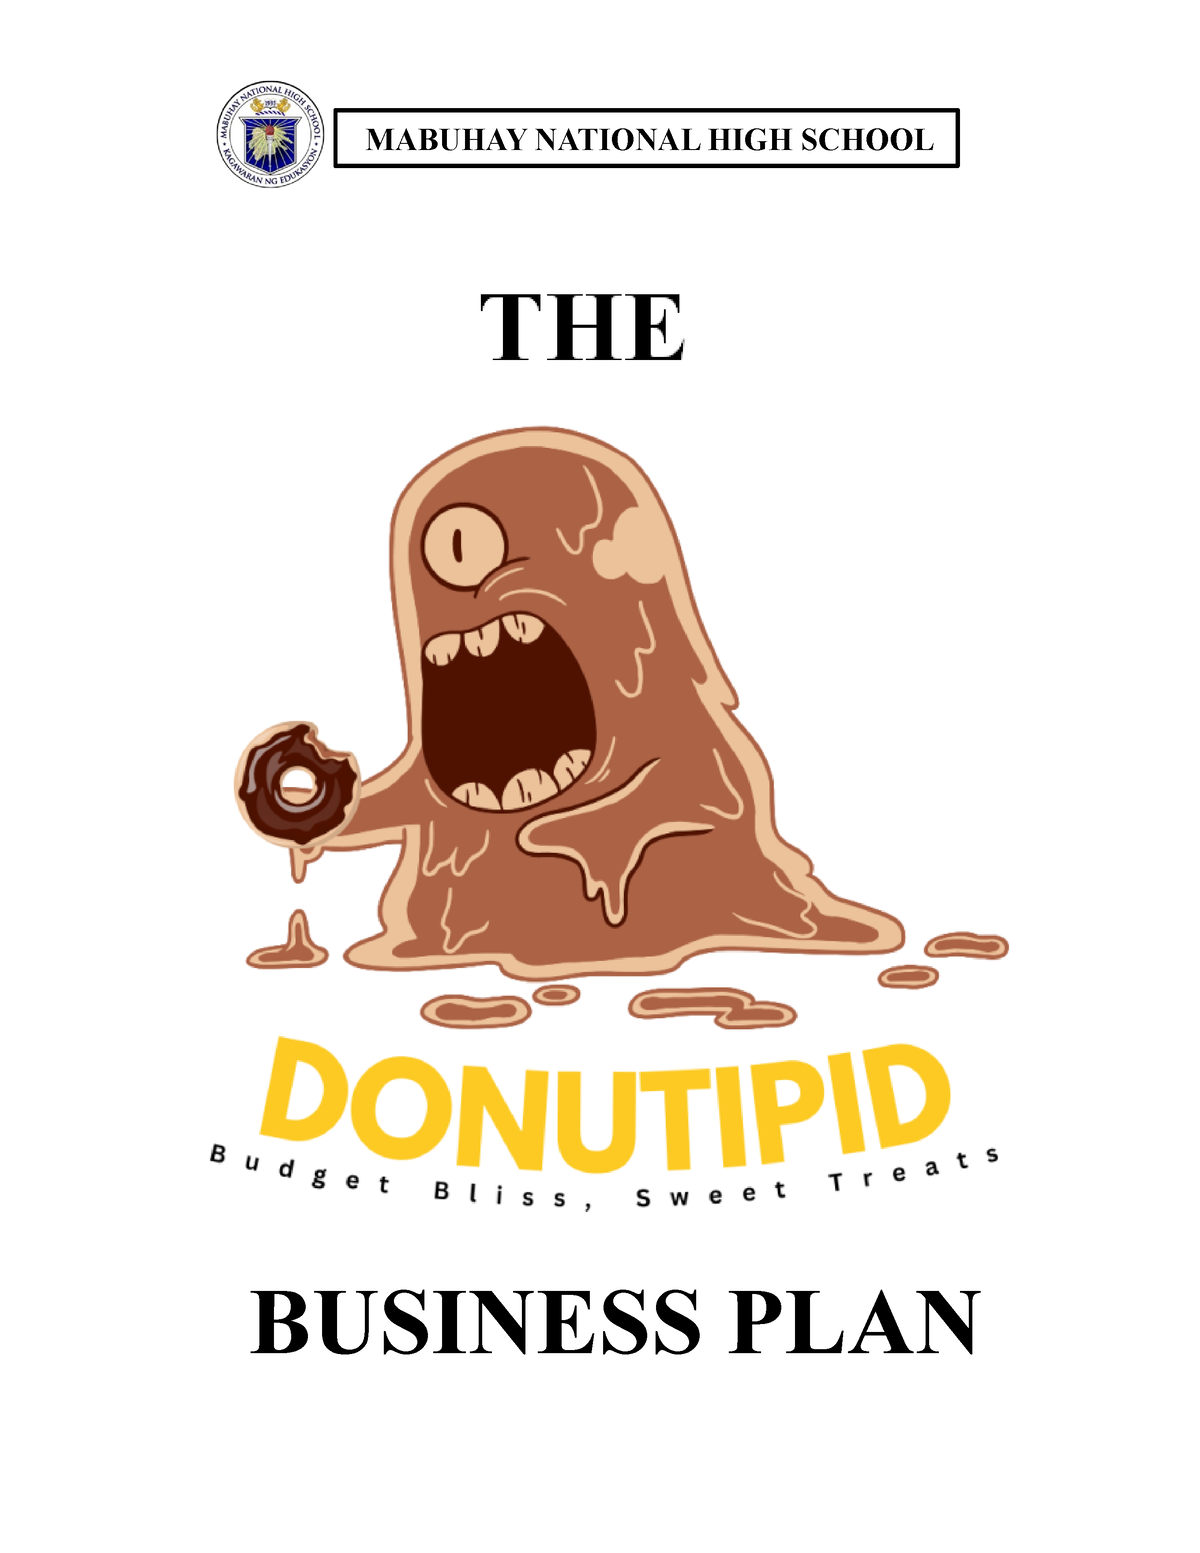 business plan on doughnut